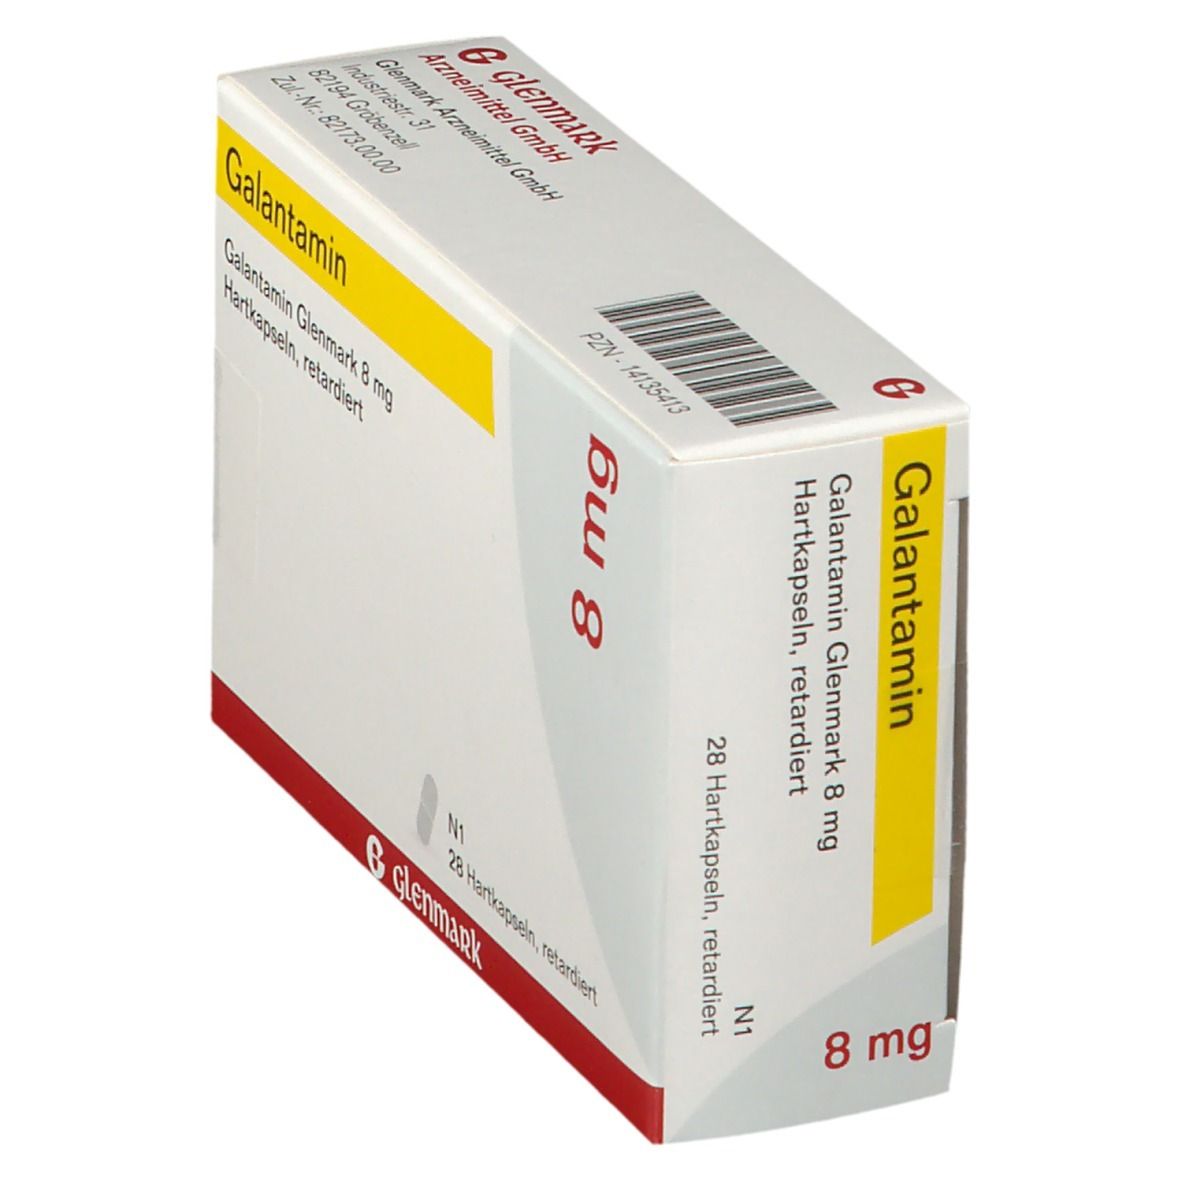 Galantamin Glenmark 8 mg